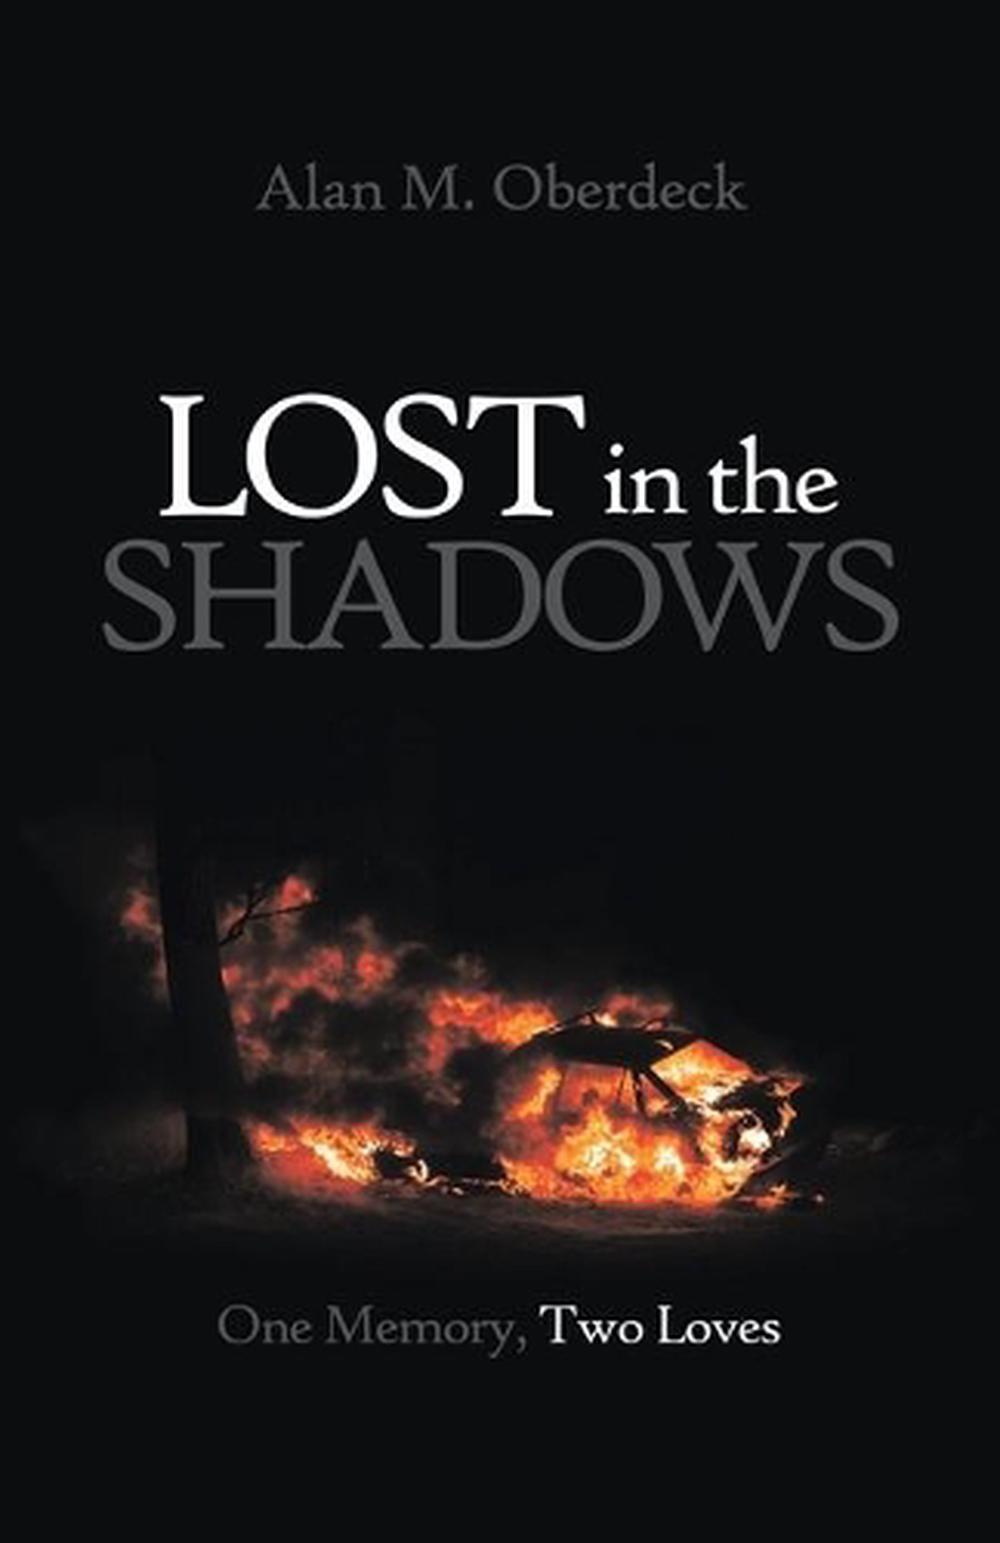 lost in the shadows book paul davis